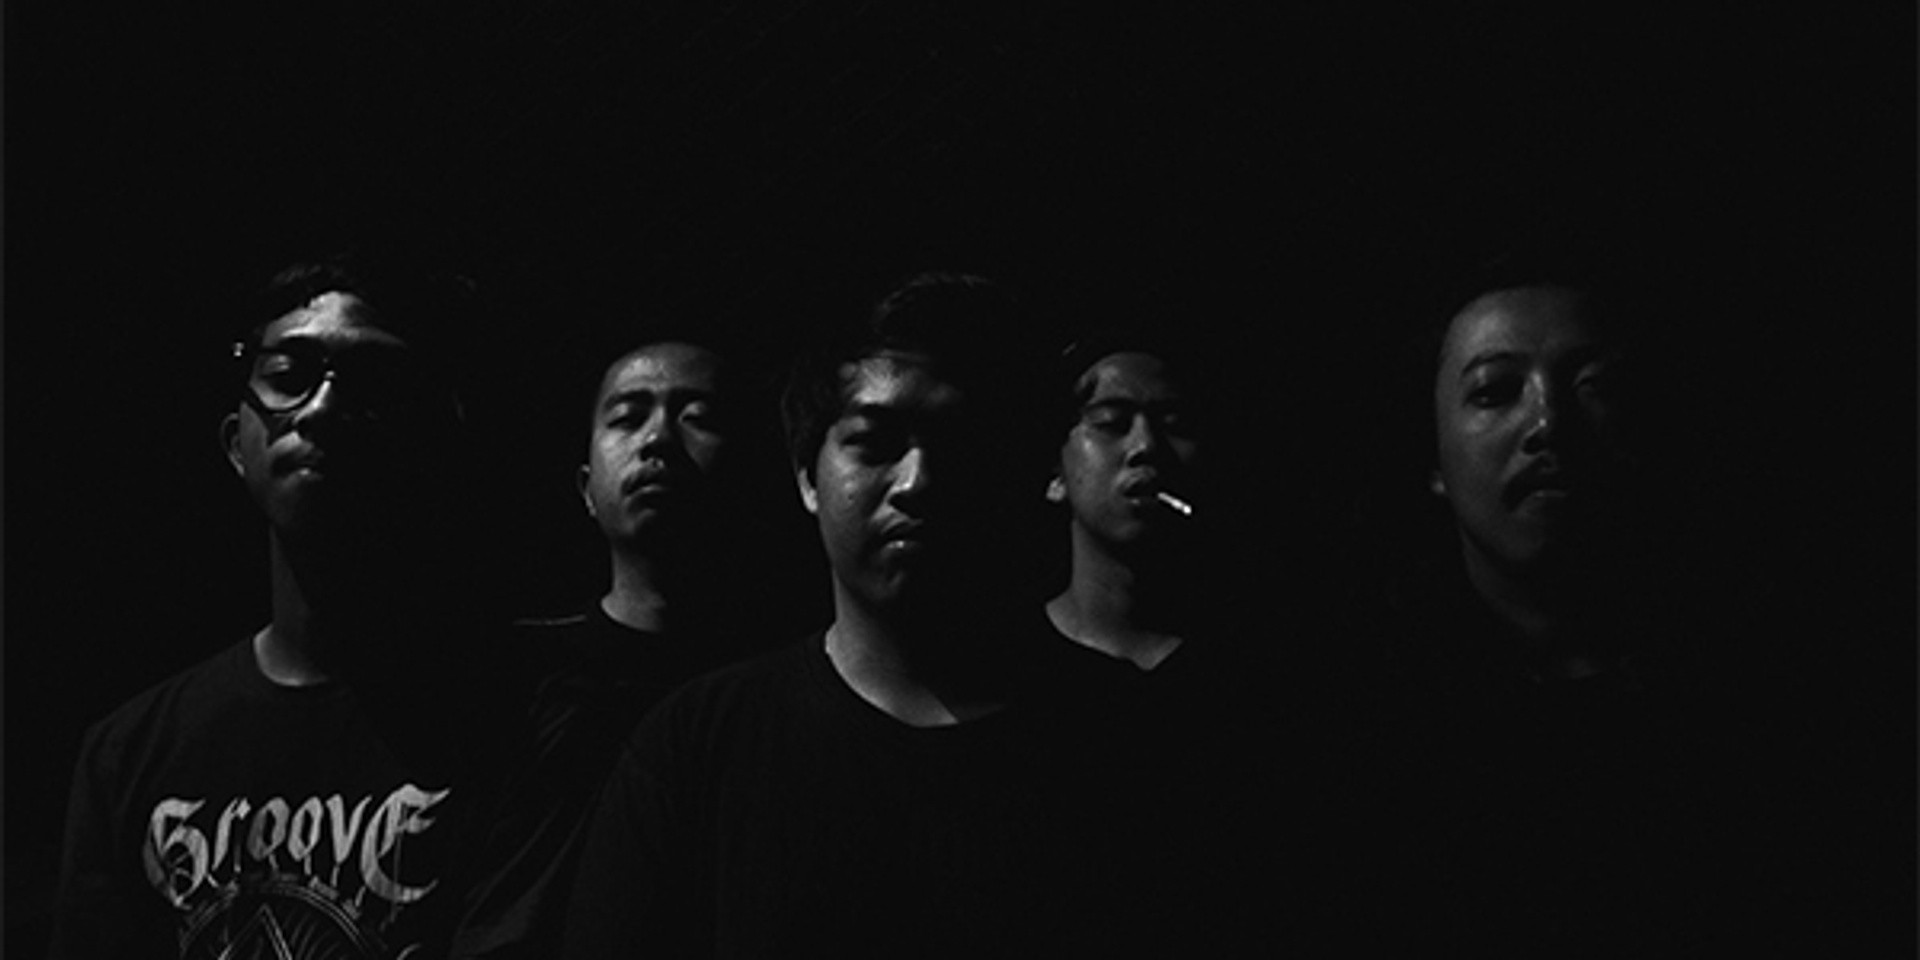 Bali-based mathcore band Advark release gritty new single 'Geramus' — listen